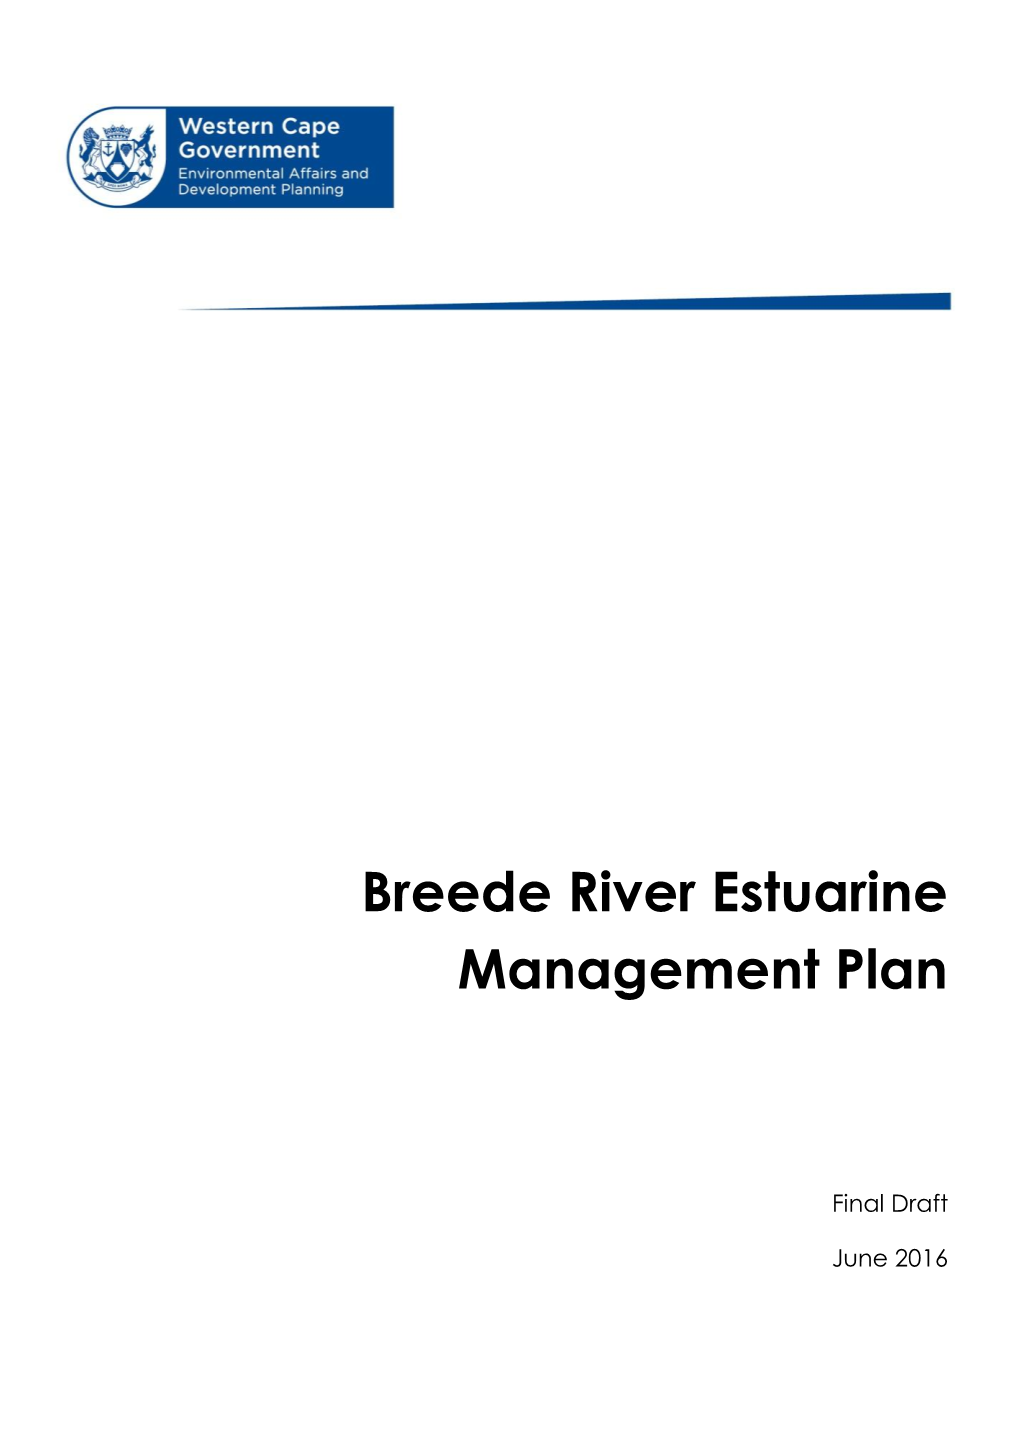 Breede River Estuarine Management Plan